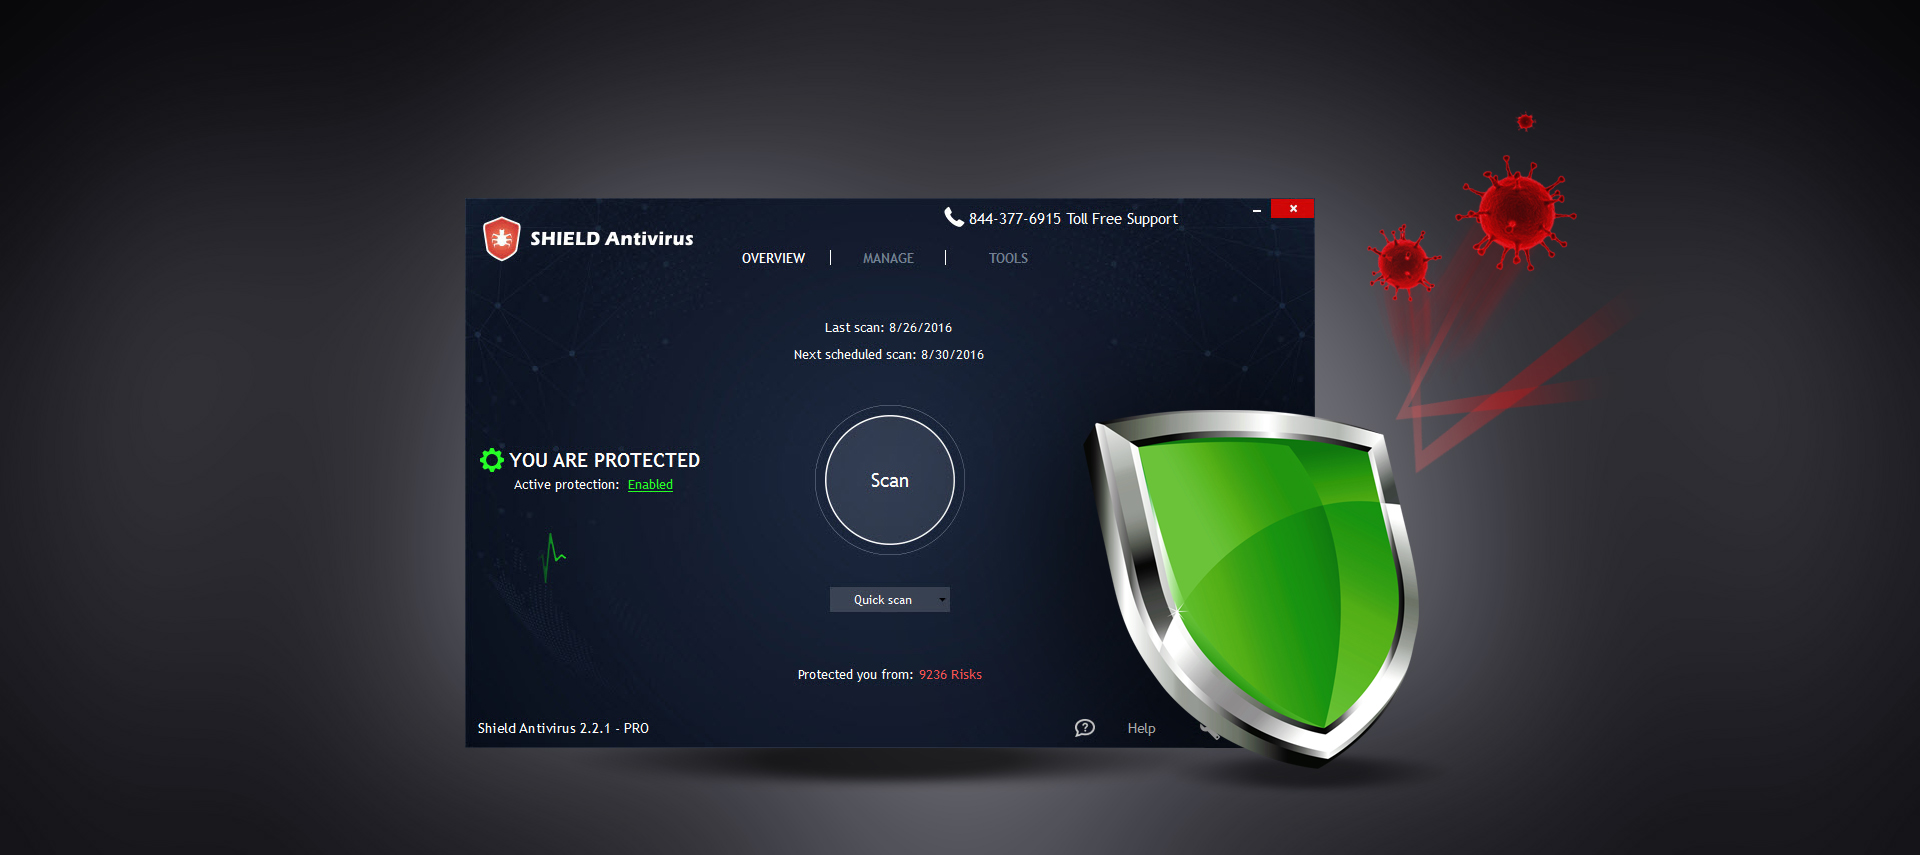 Shield Antivirus Pro 5.2.4 for ios download free